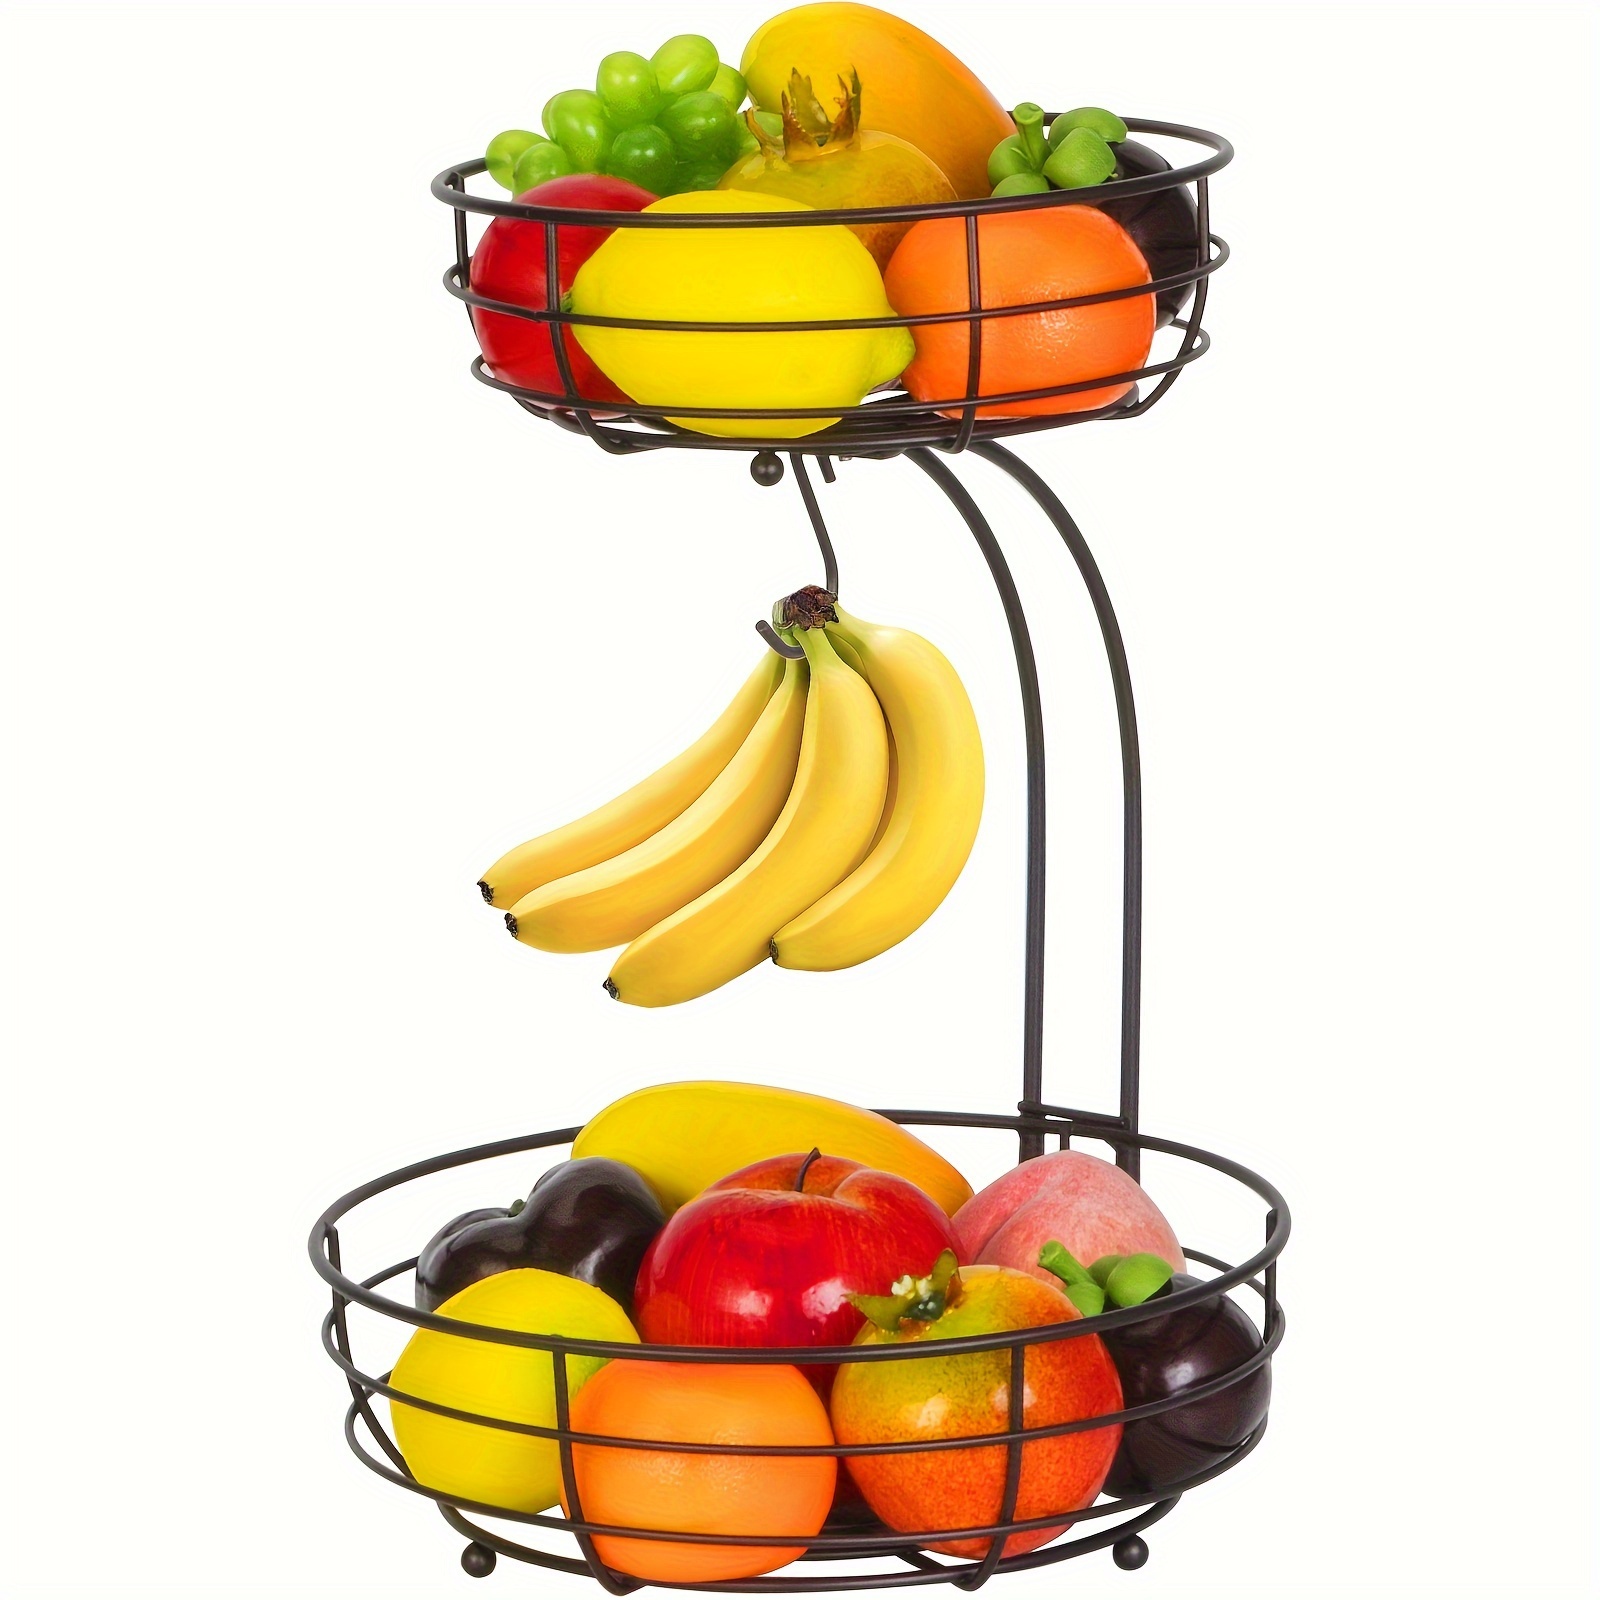 

2 Tier Fruit Basket With Banana Hanger, Vegetables Fruit Bowl Storage With Banana Holder, Metal Wire Basket Fruits Stand Organizer For Fruit Bread Veggies